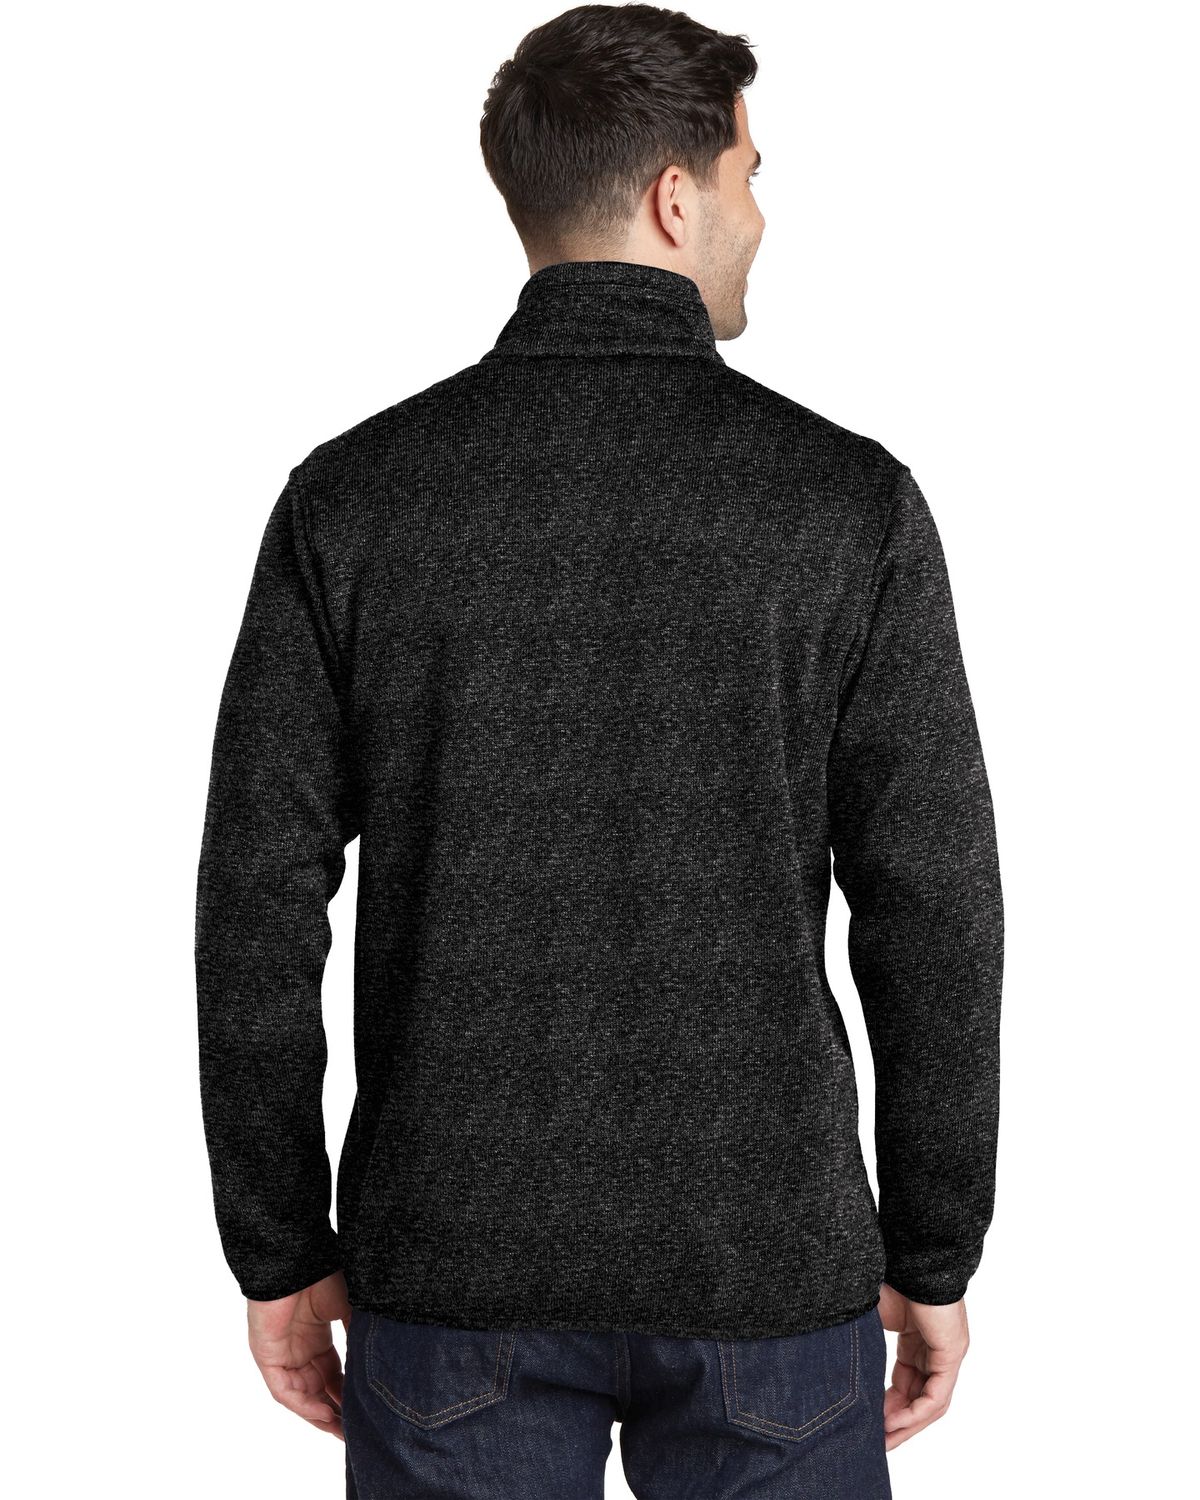 'Port Authority F232 Sweater Fleece Jacket'